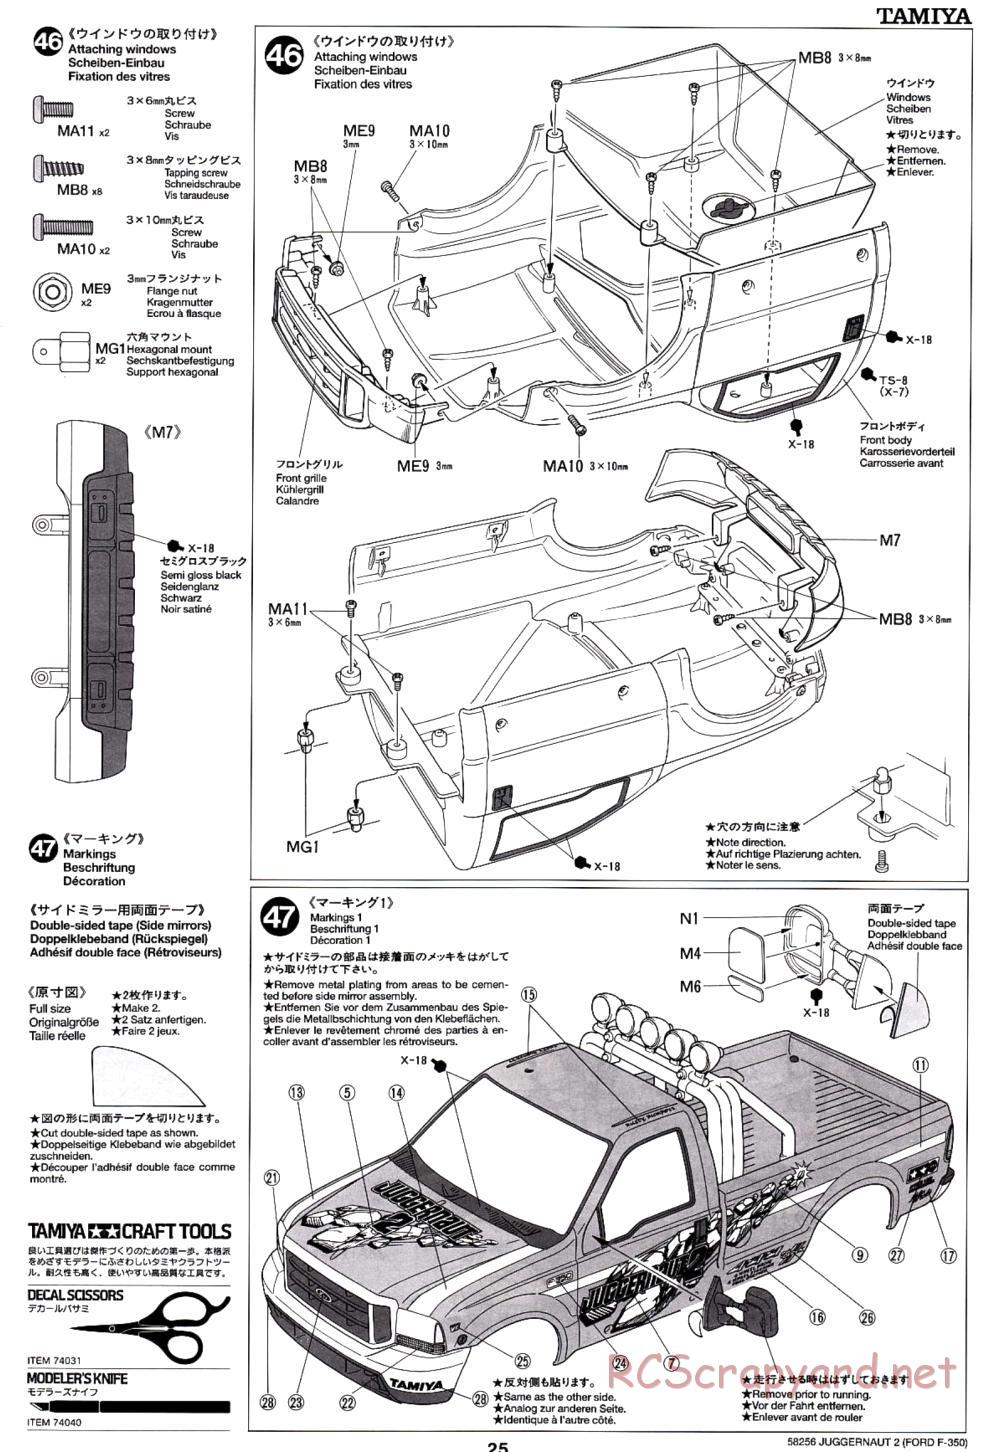 Tamiya - Juggernaut 2 Chassis - Manual - Page 25